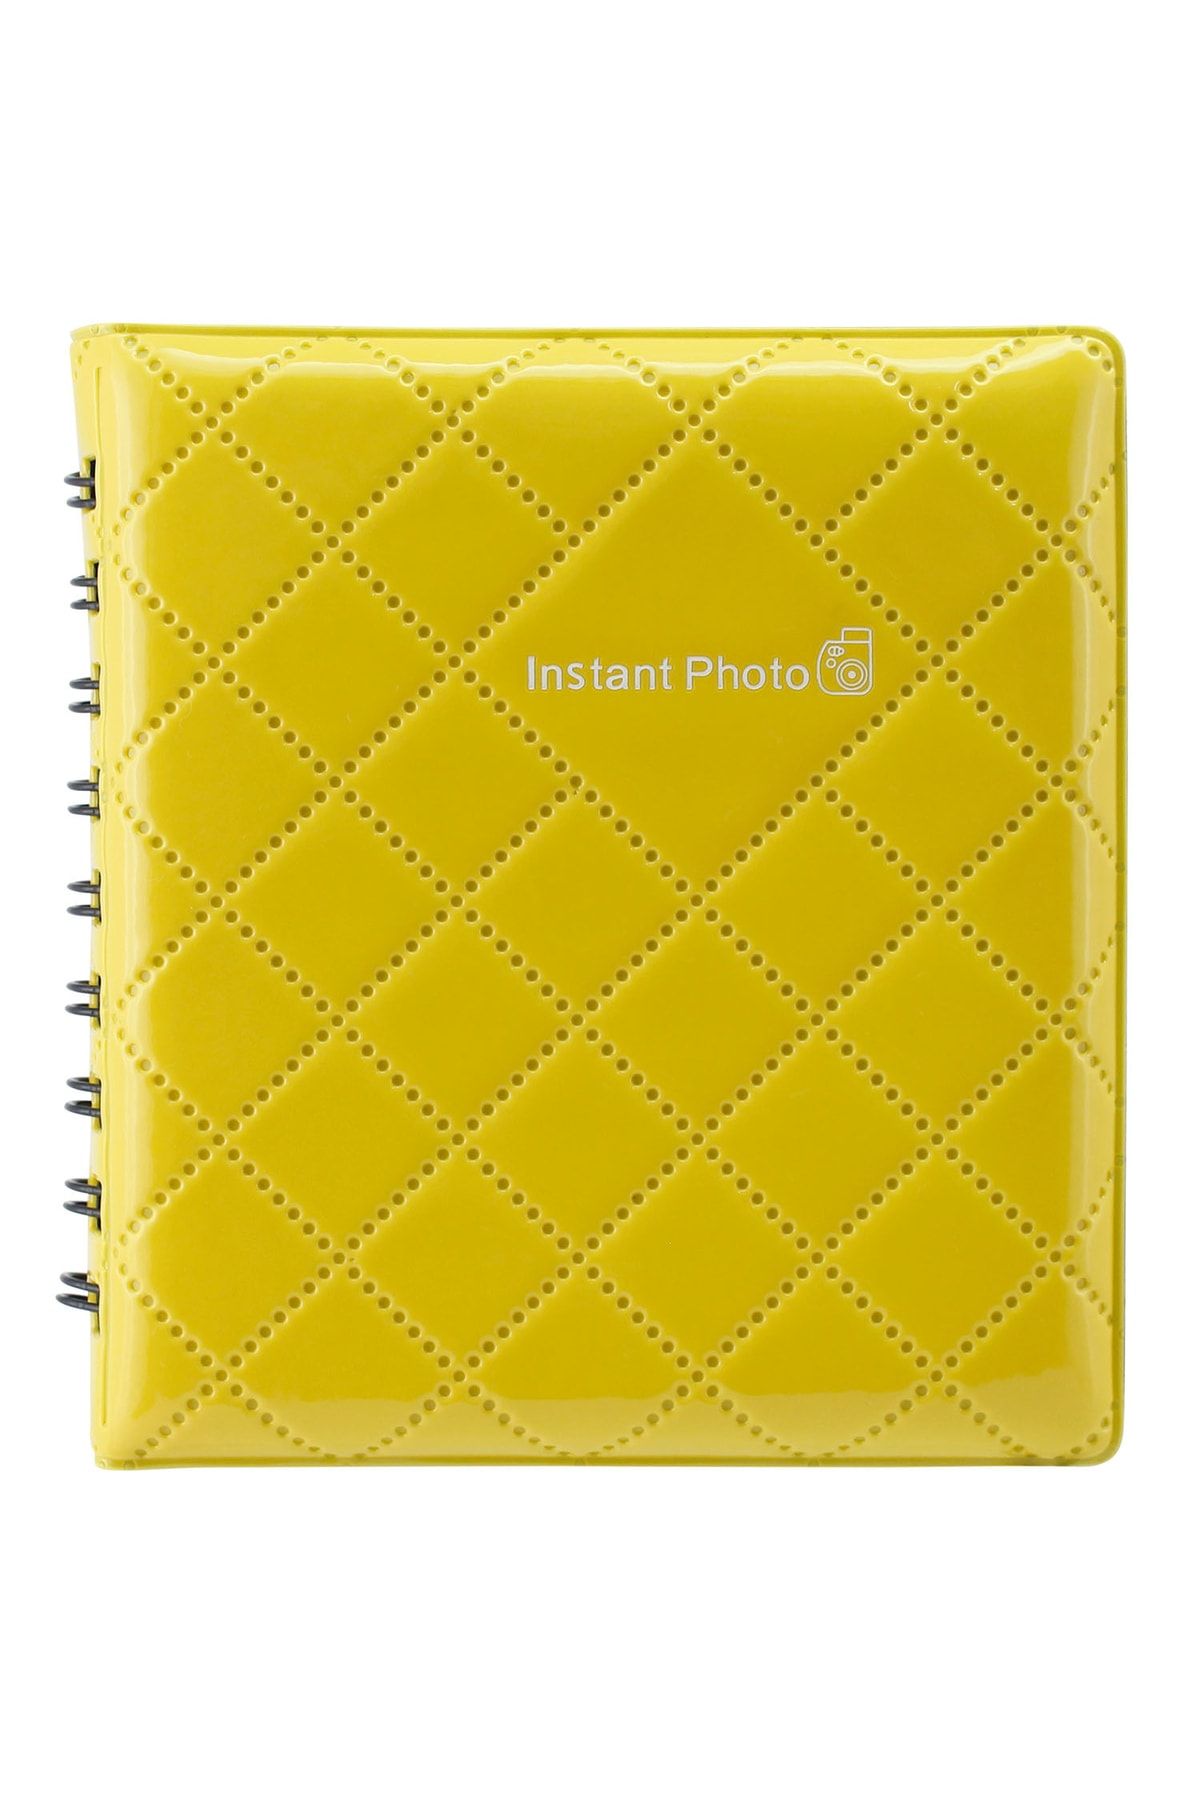 Fujifilm Instax Mini Sarı Kare Albüm